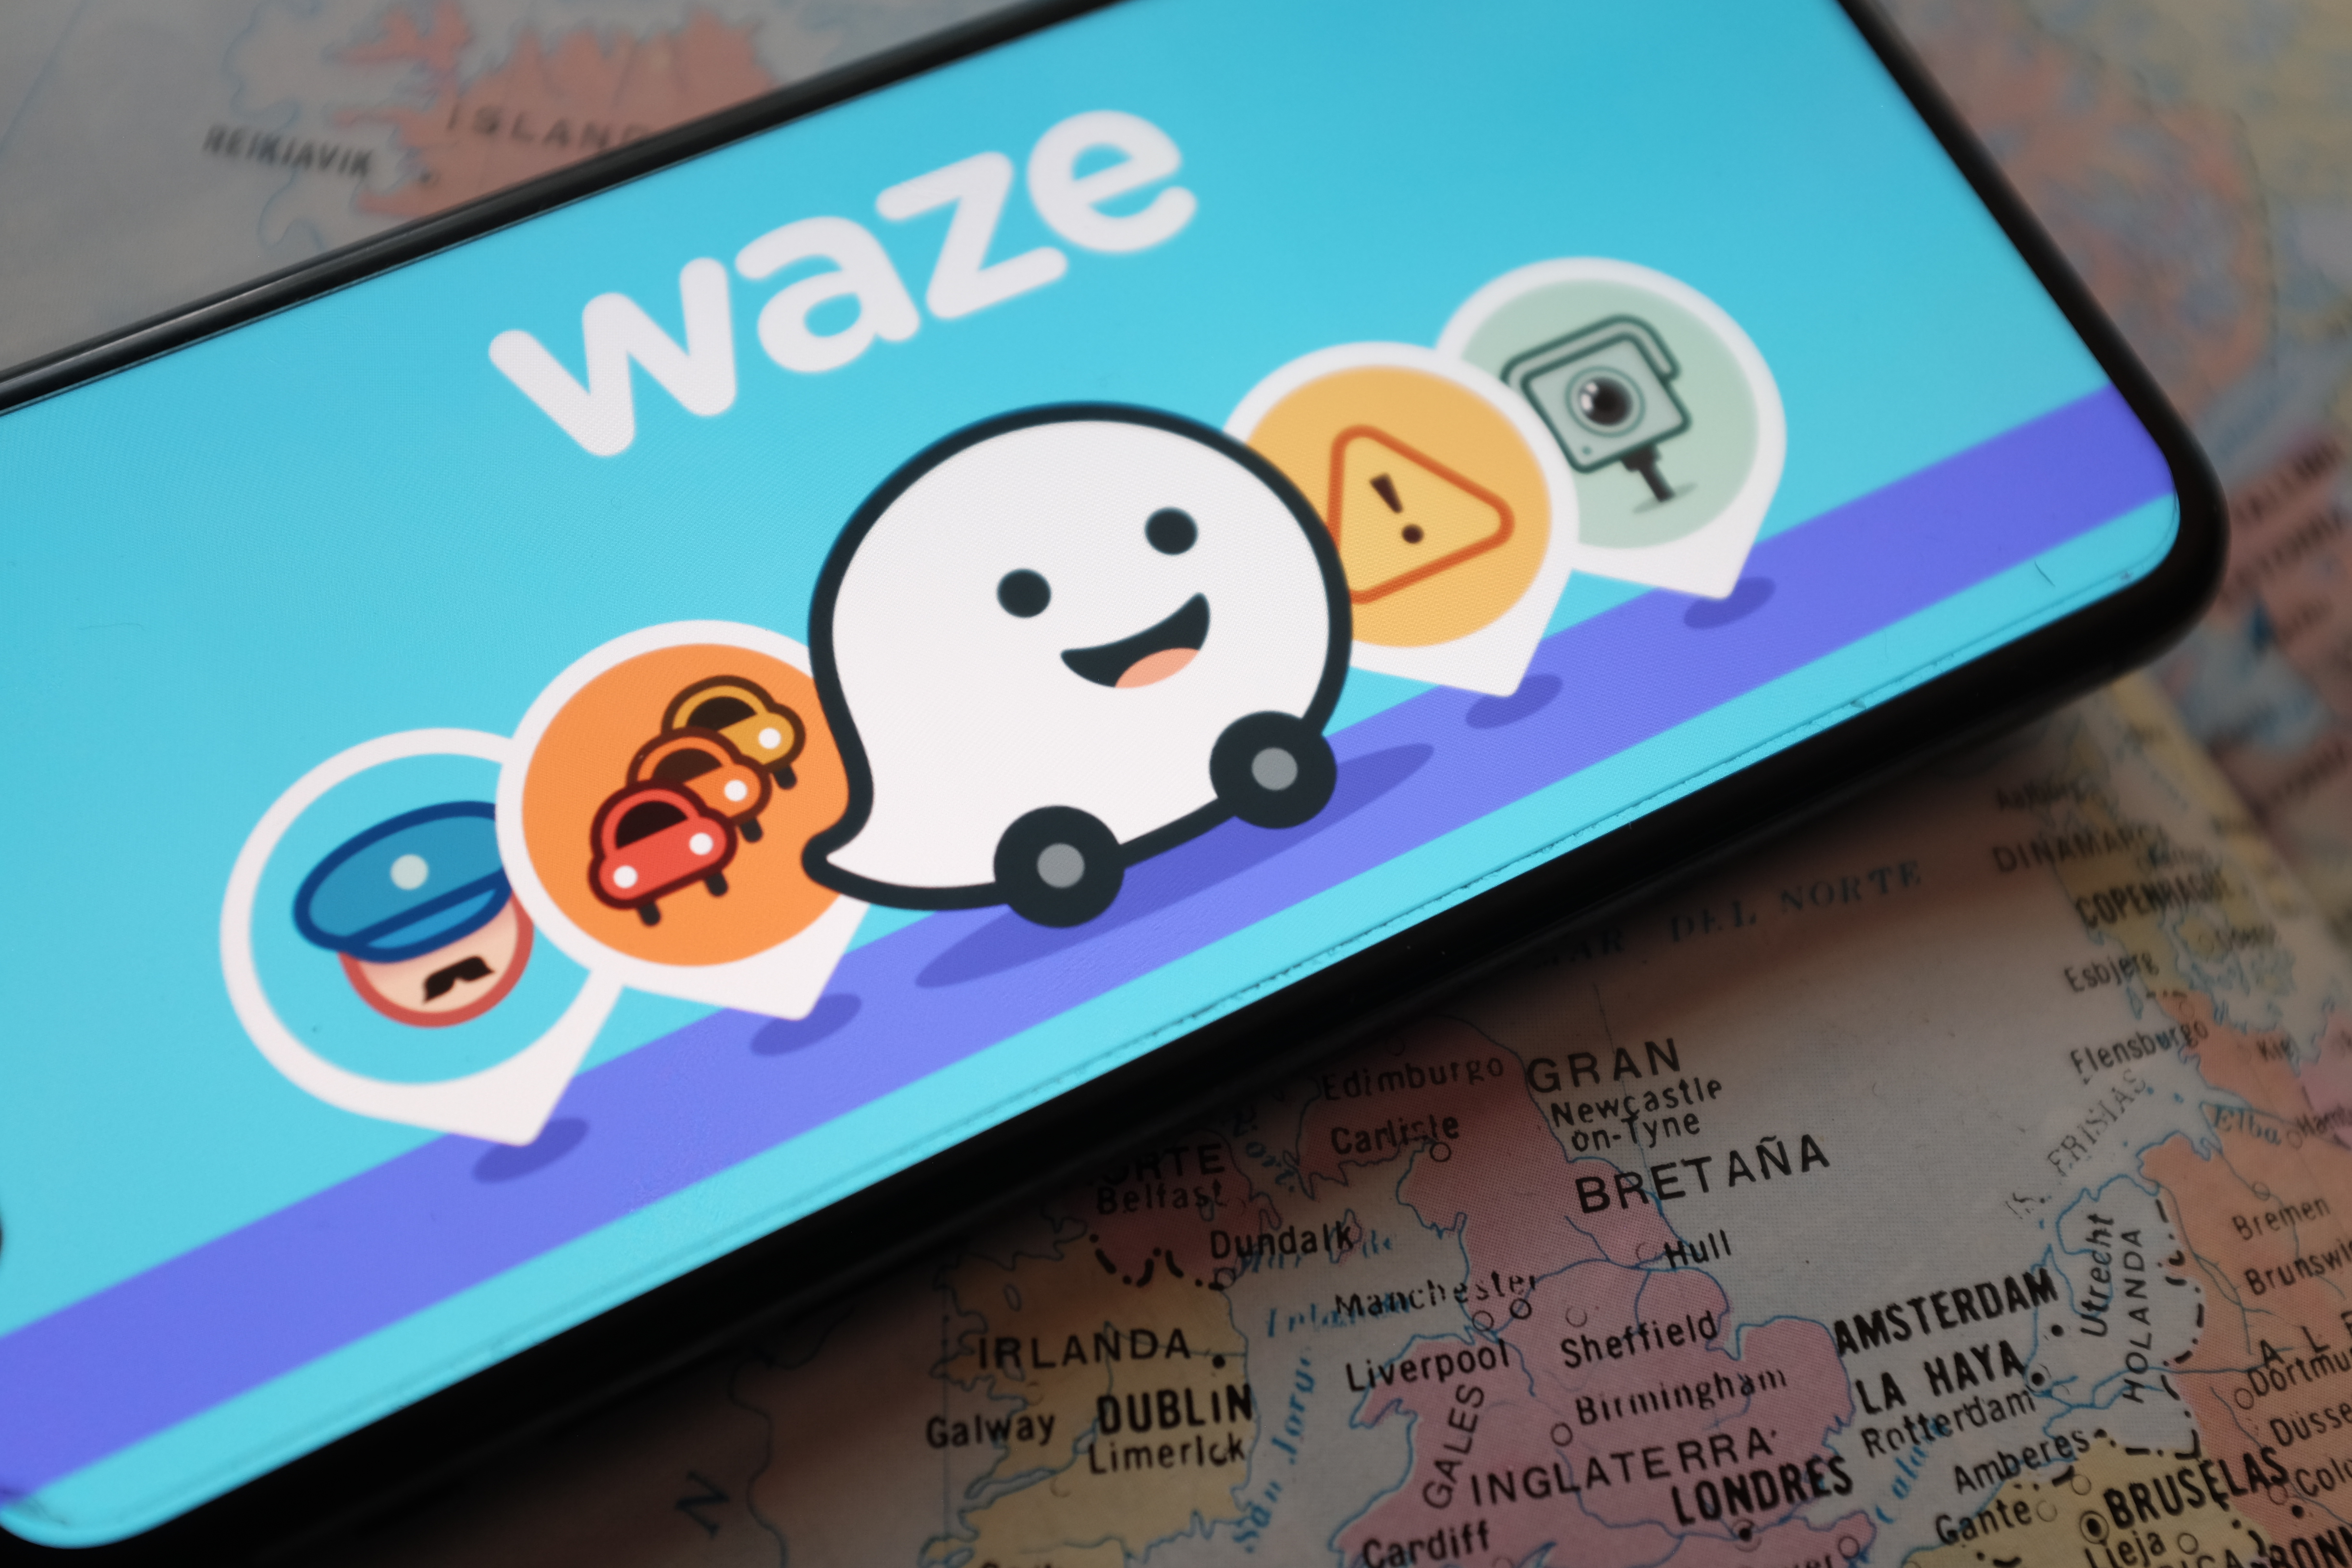 Waze app on phone